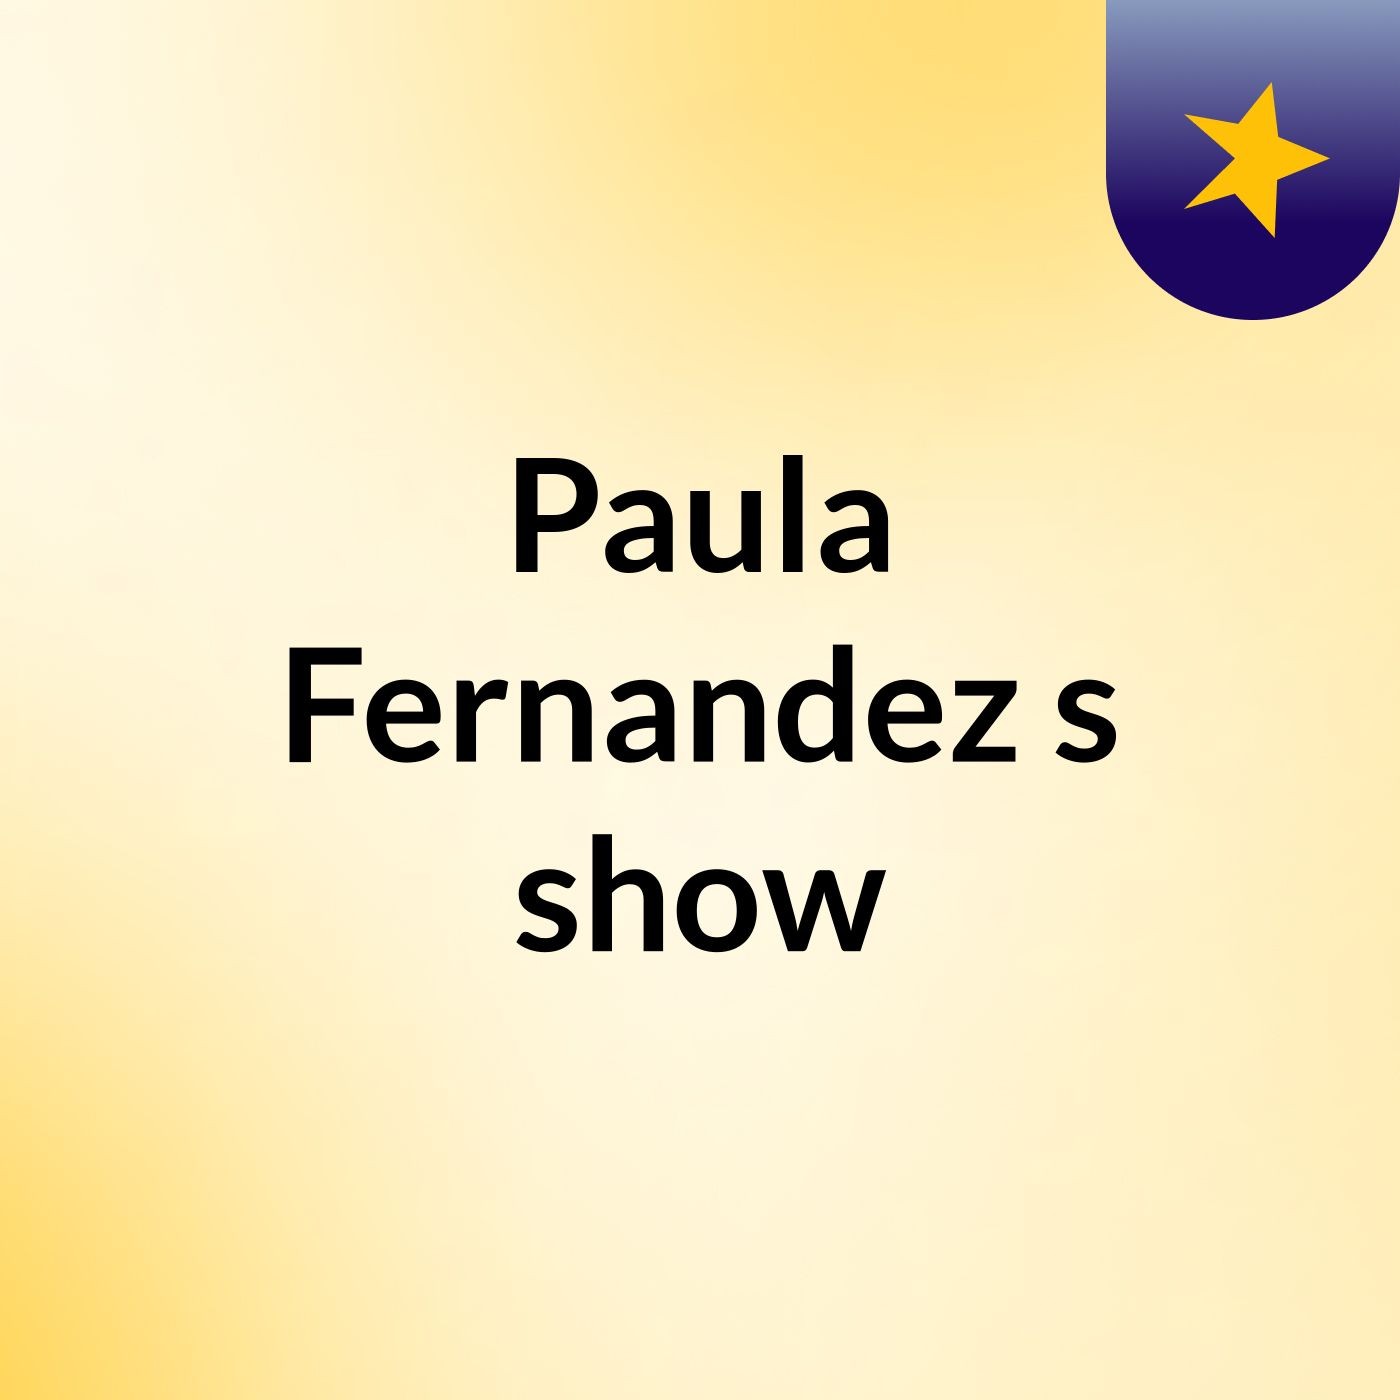 Paula Fernandez's show